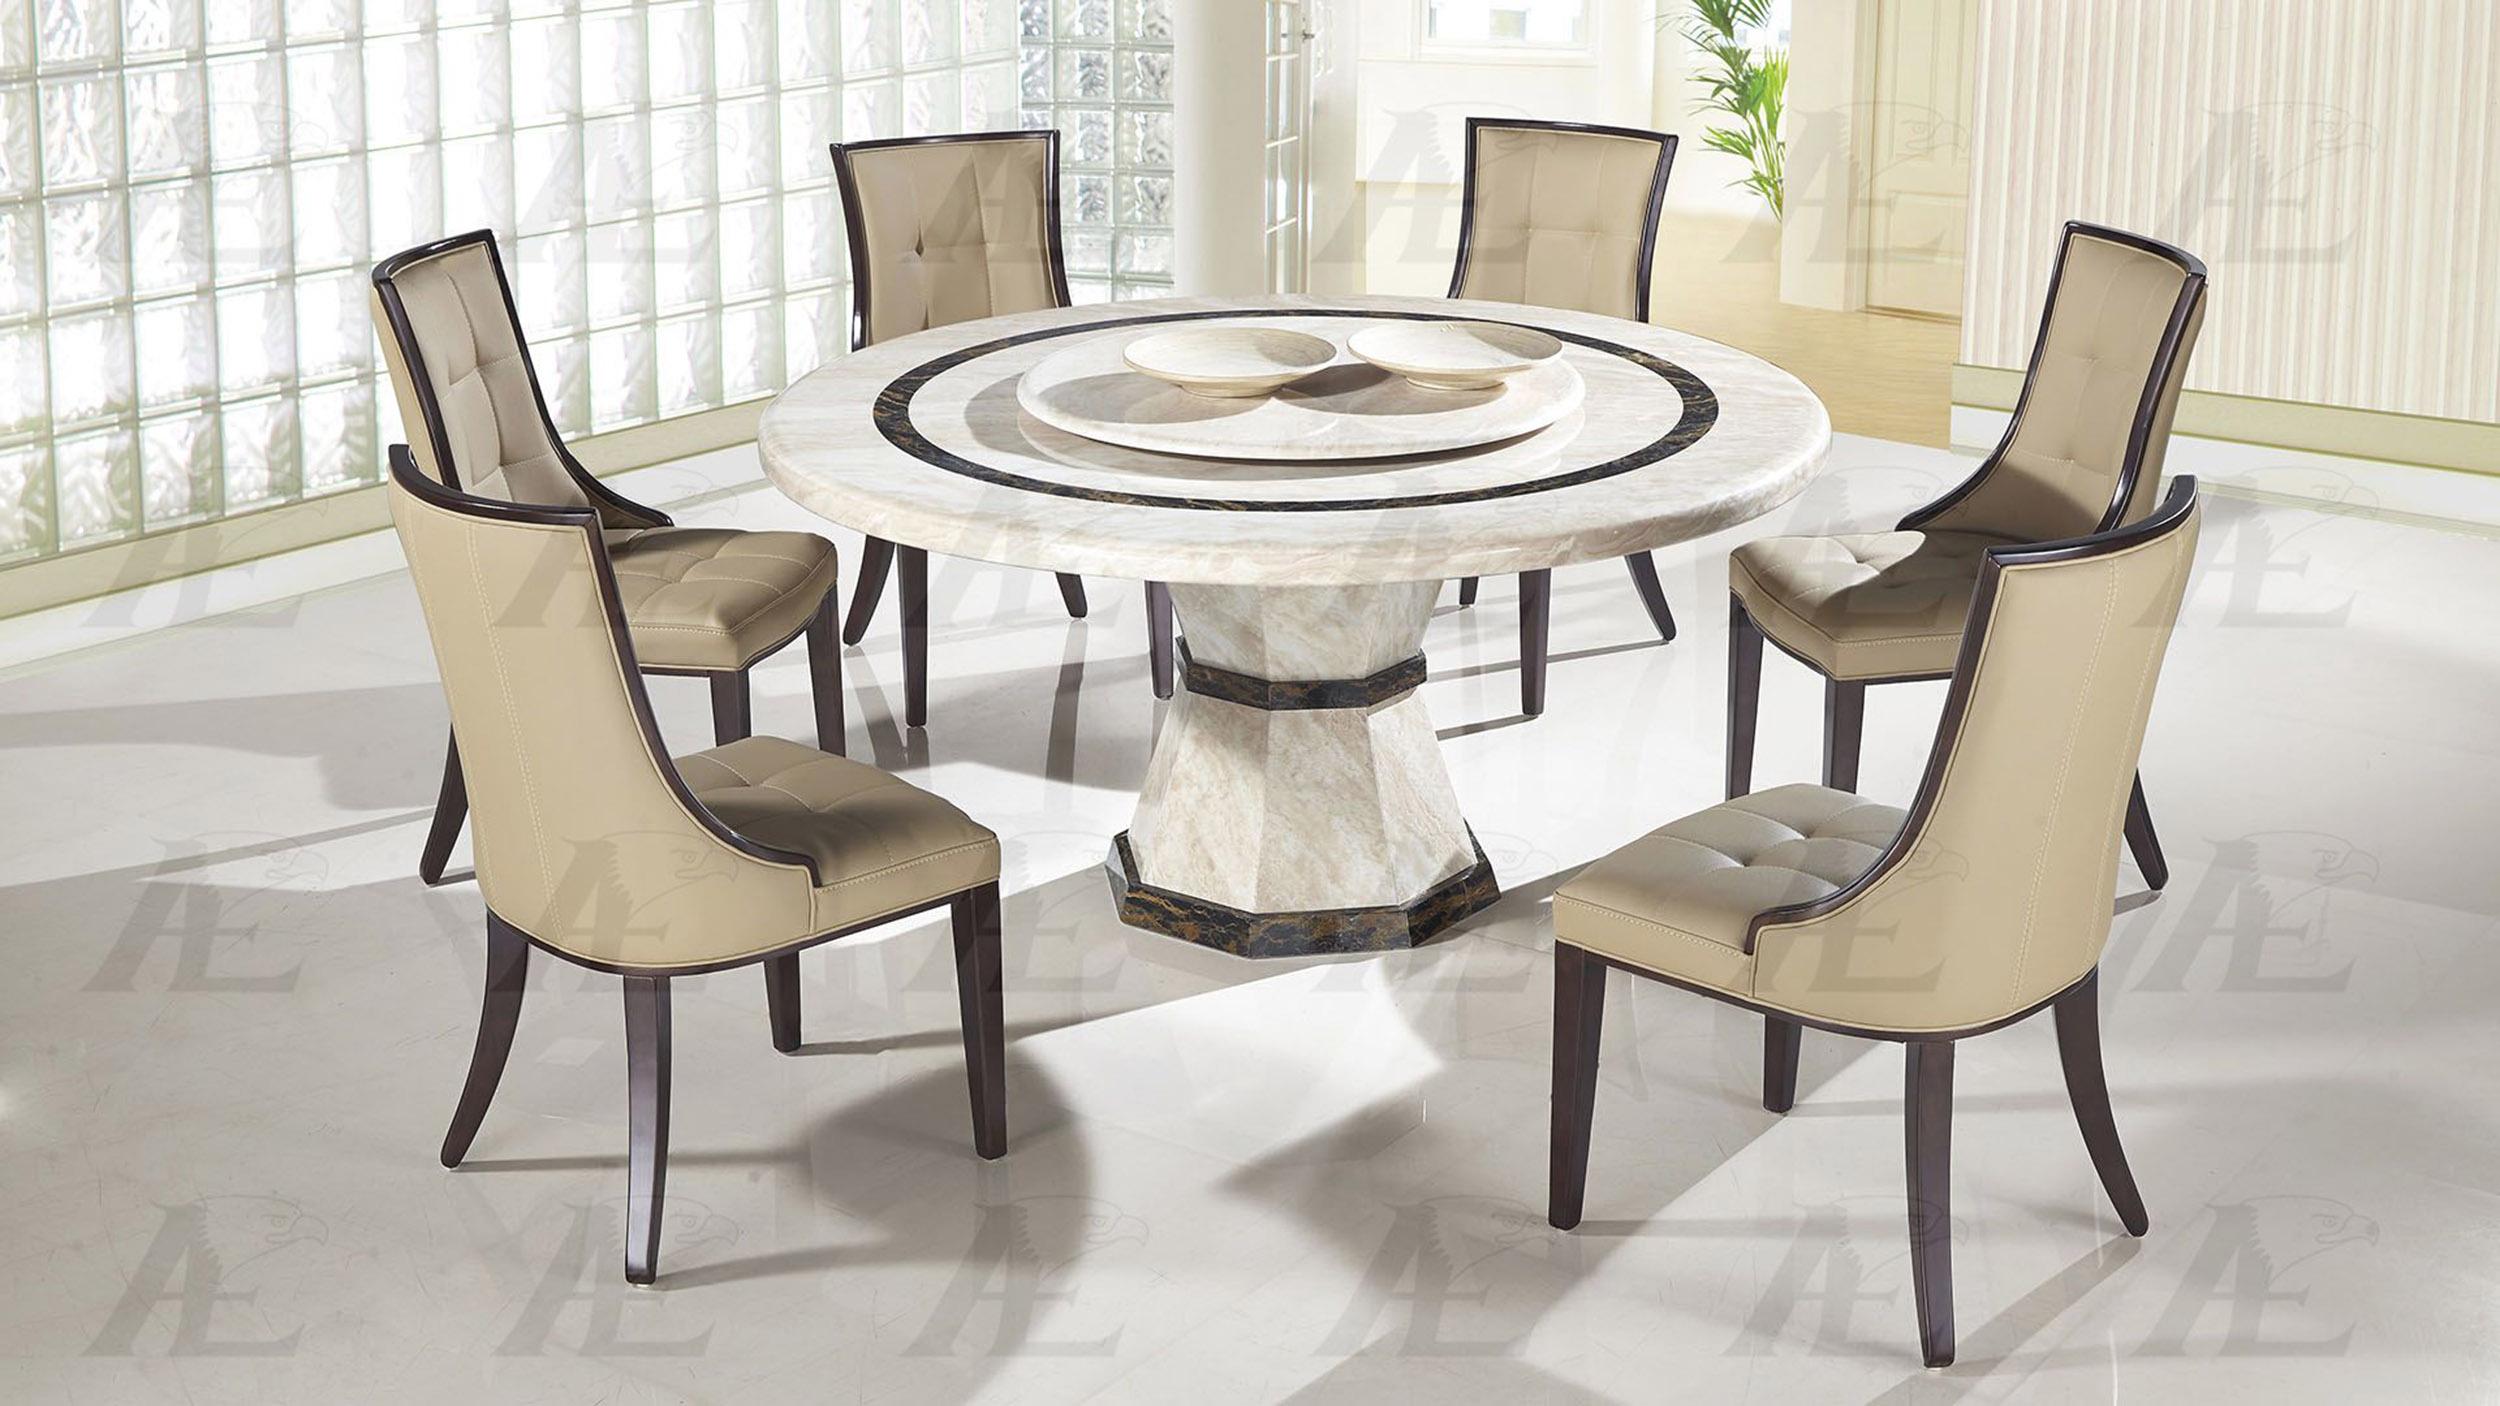 American Eagle Furniture DT-H38 / CK-H603-TAN Dining Table Set